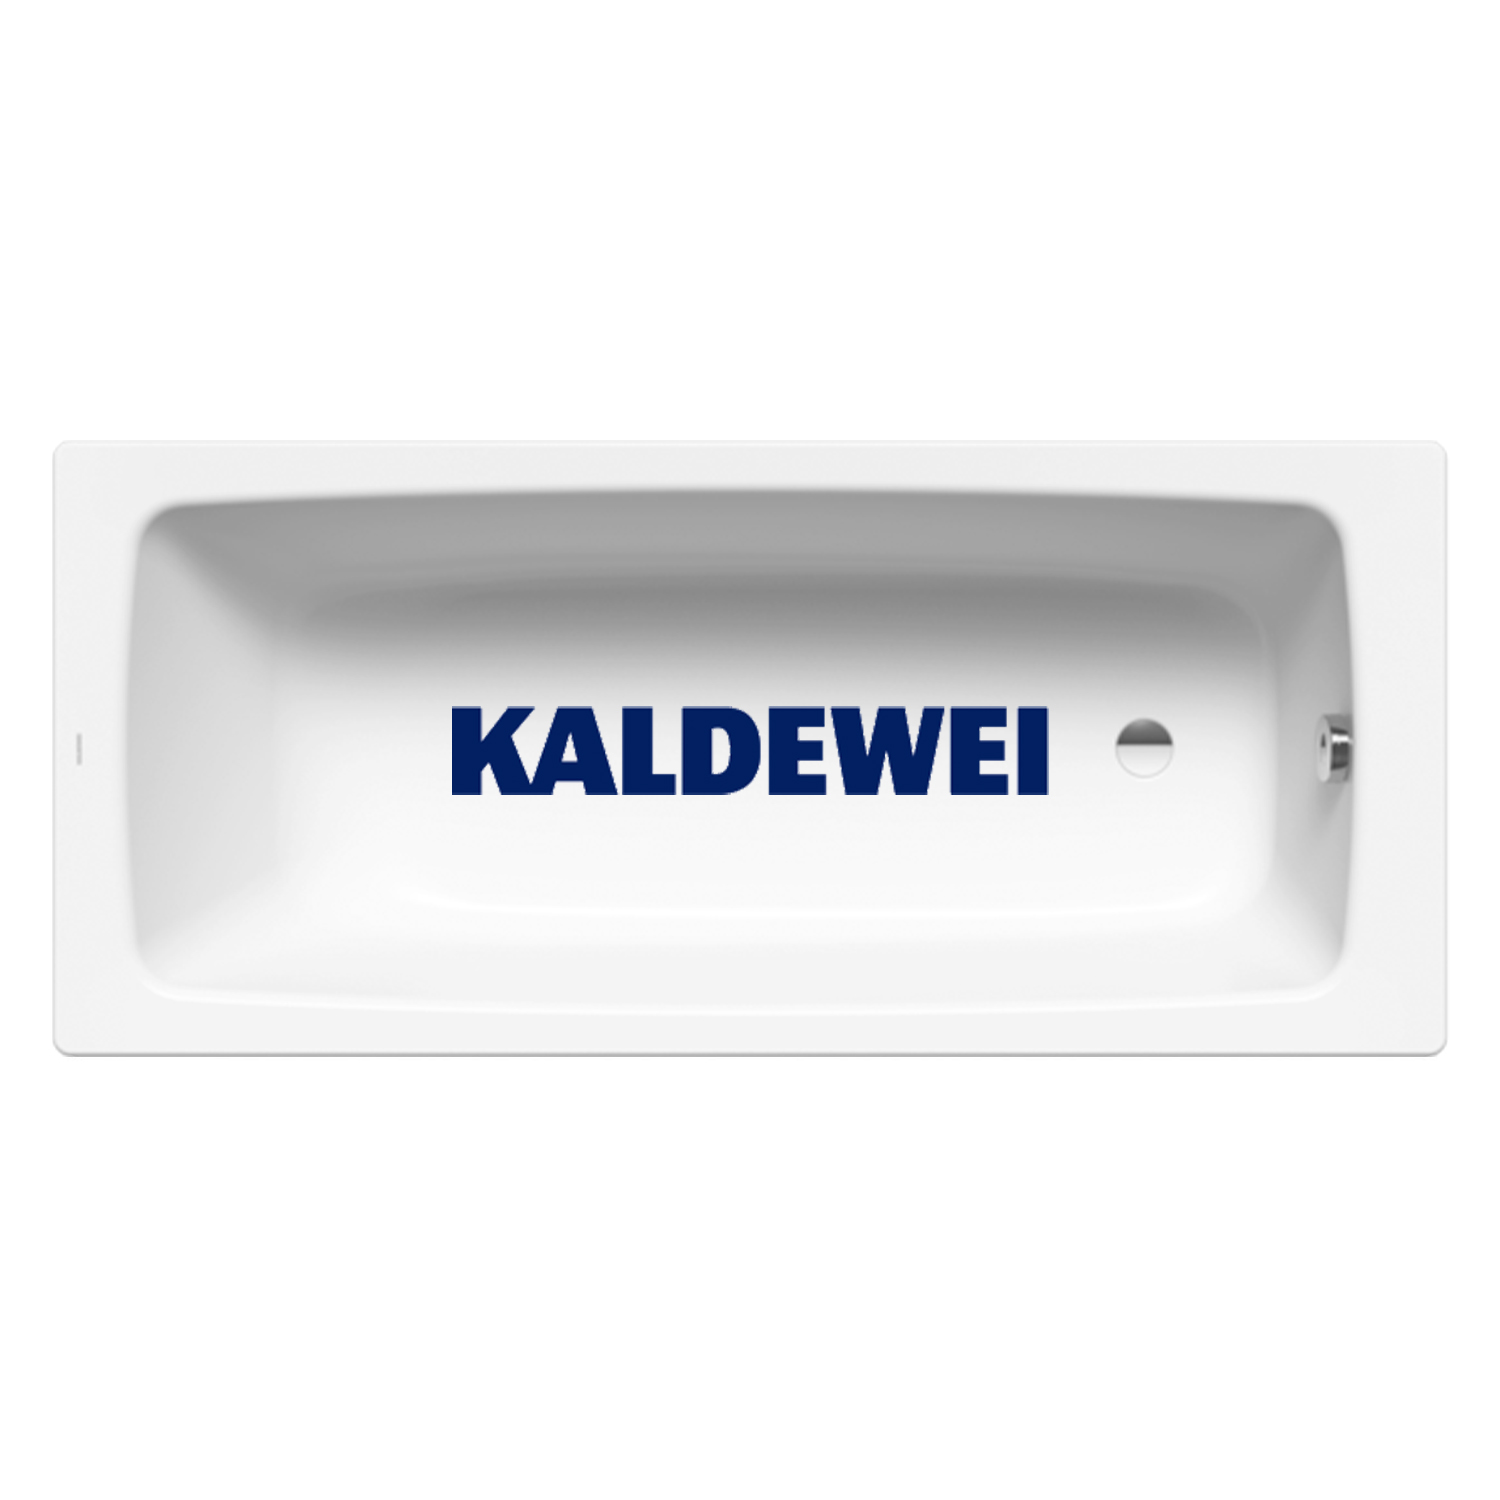 Ванна kaldewei easy clean. Ванна Калдевей 180 80. Kaldewei Cayono. Kaldewei стальная ванна Владивосток.